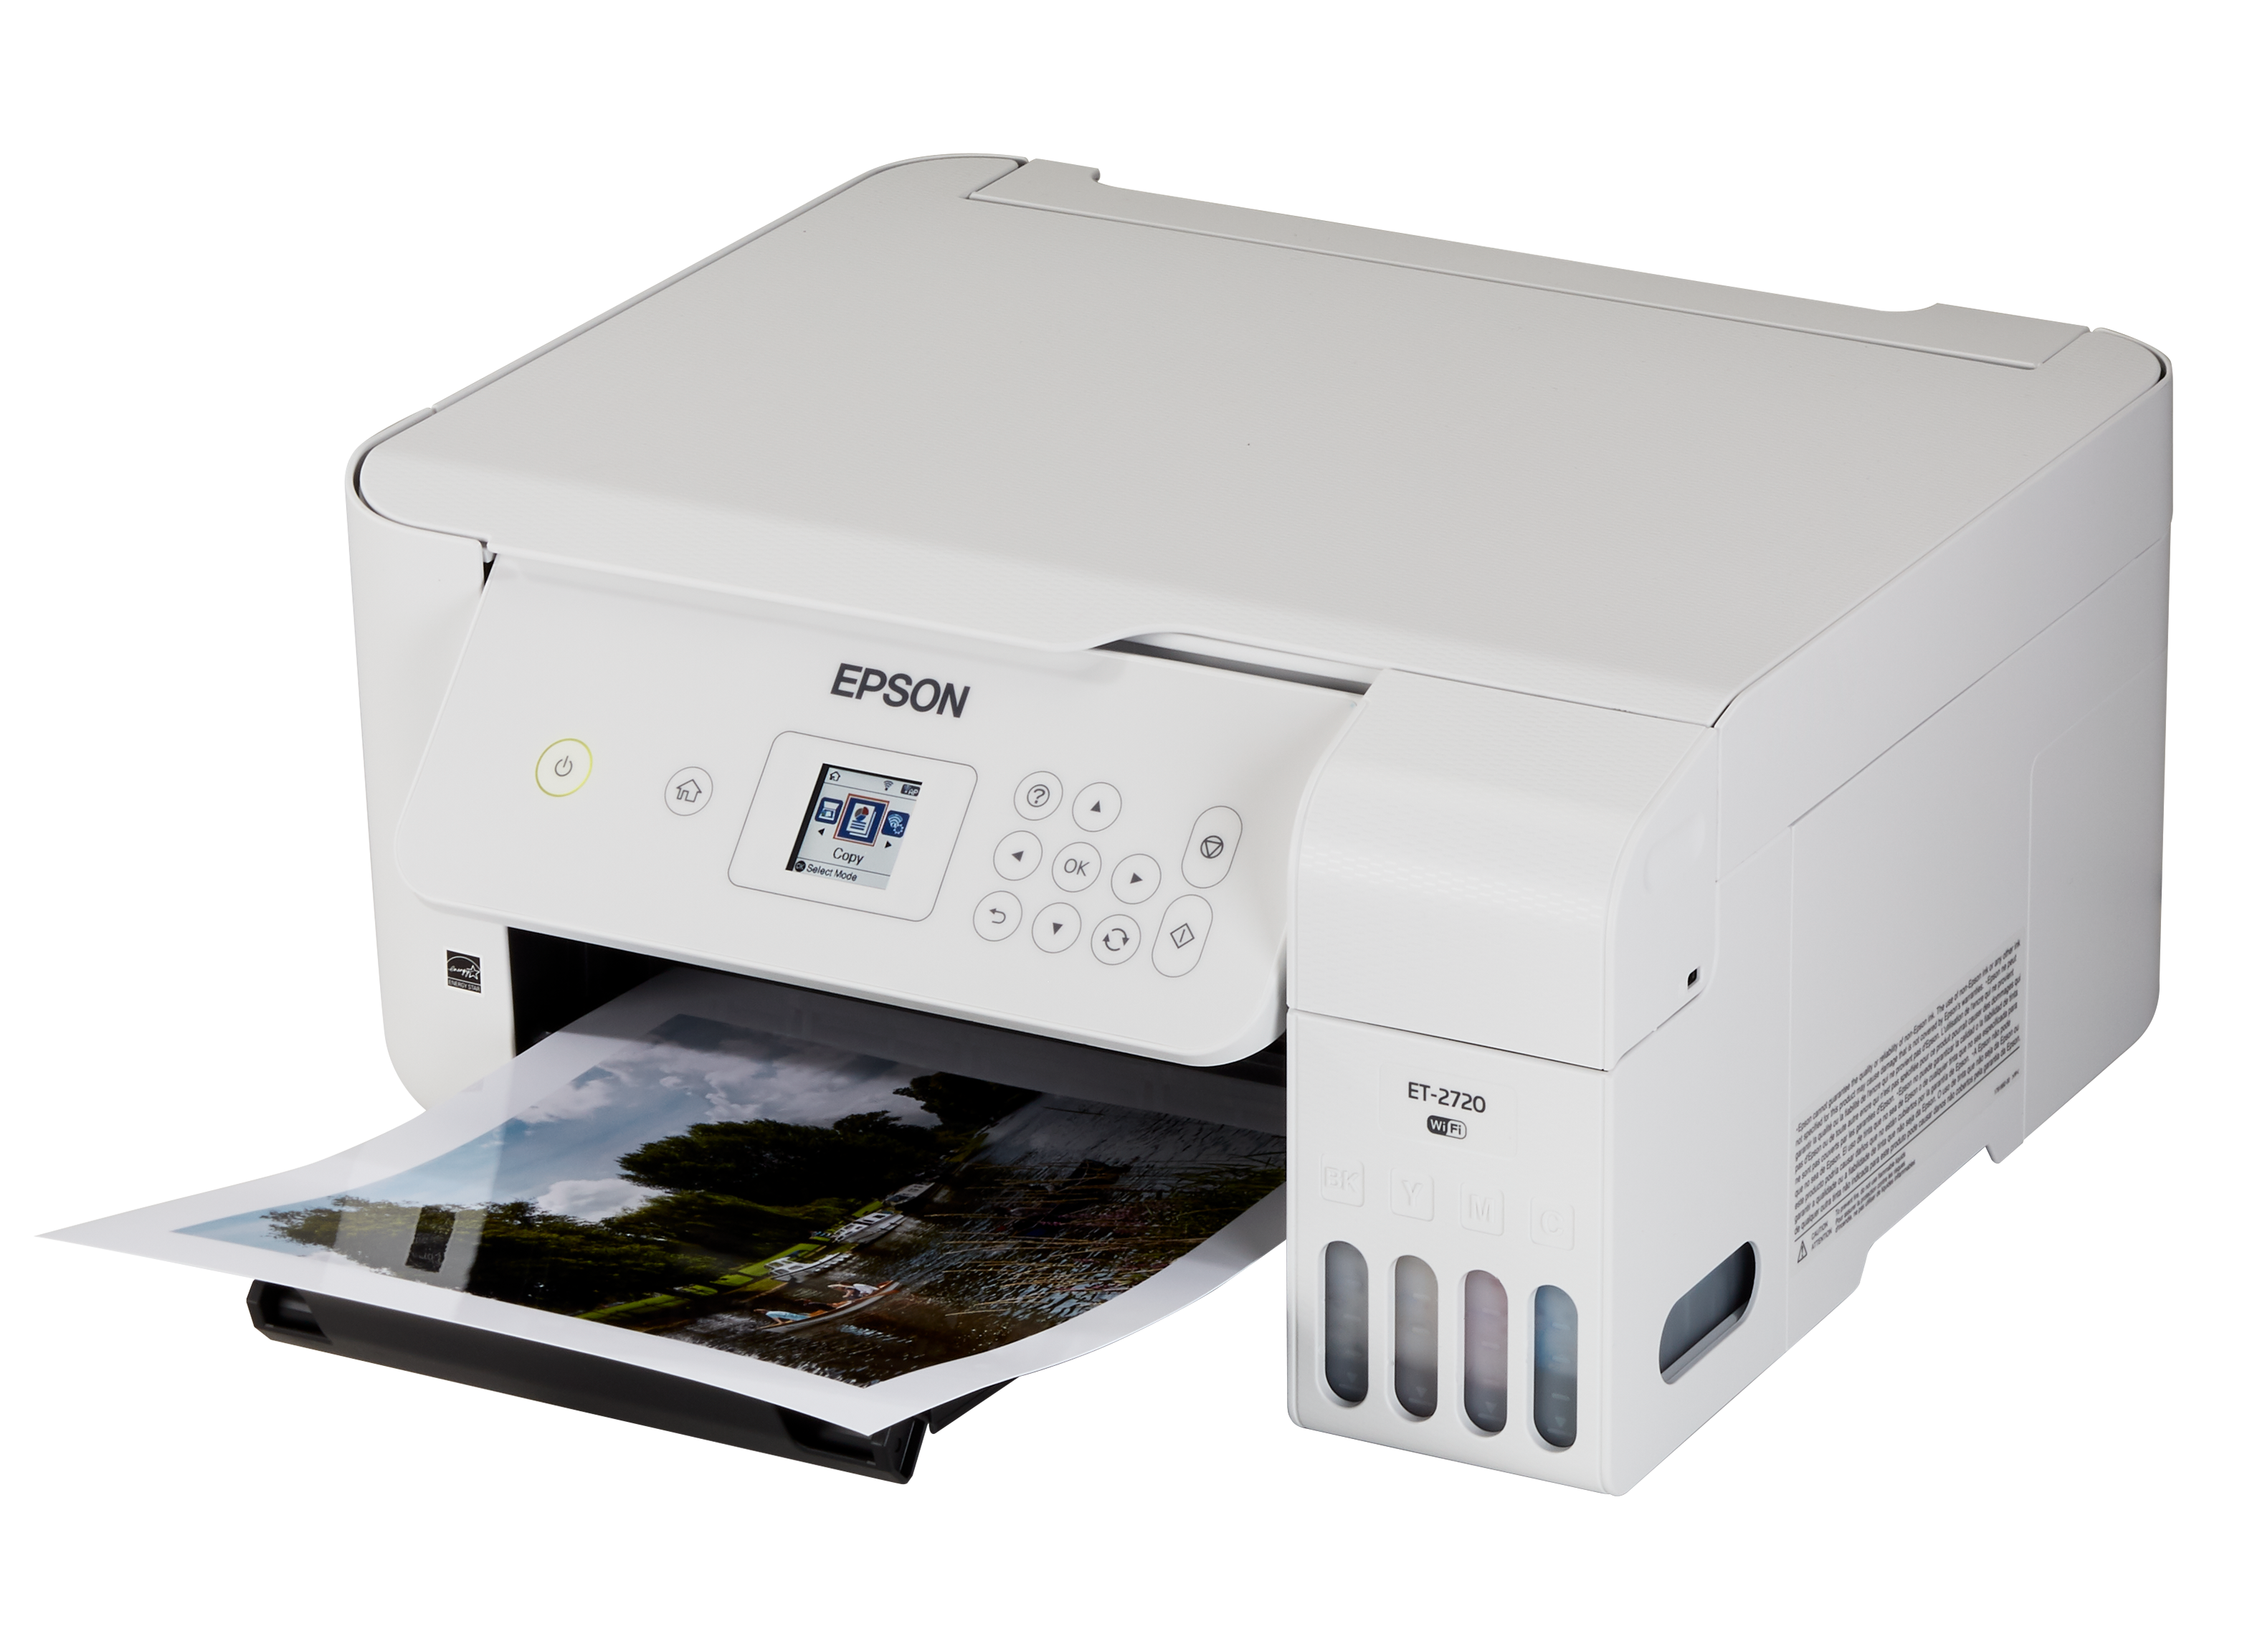 Epson EcoTank ET-2720 Printer Review - Consumer Reports